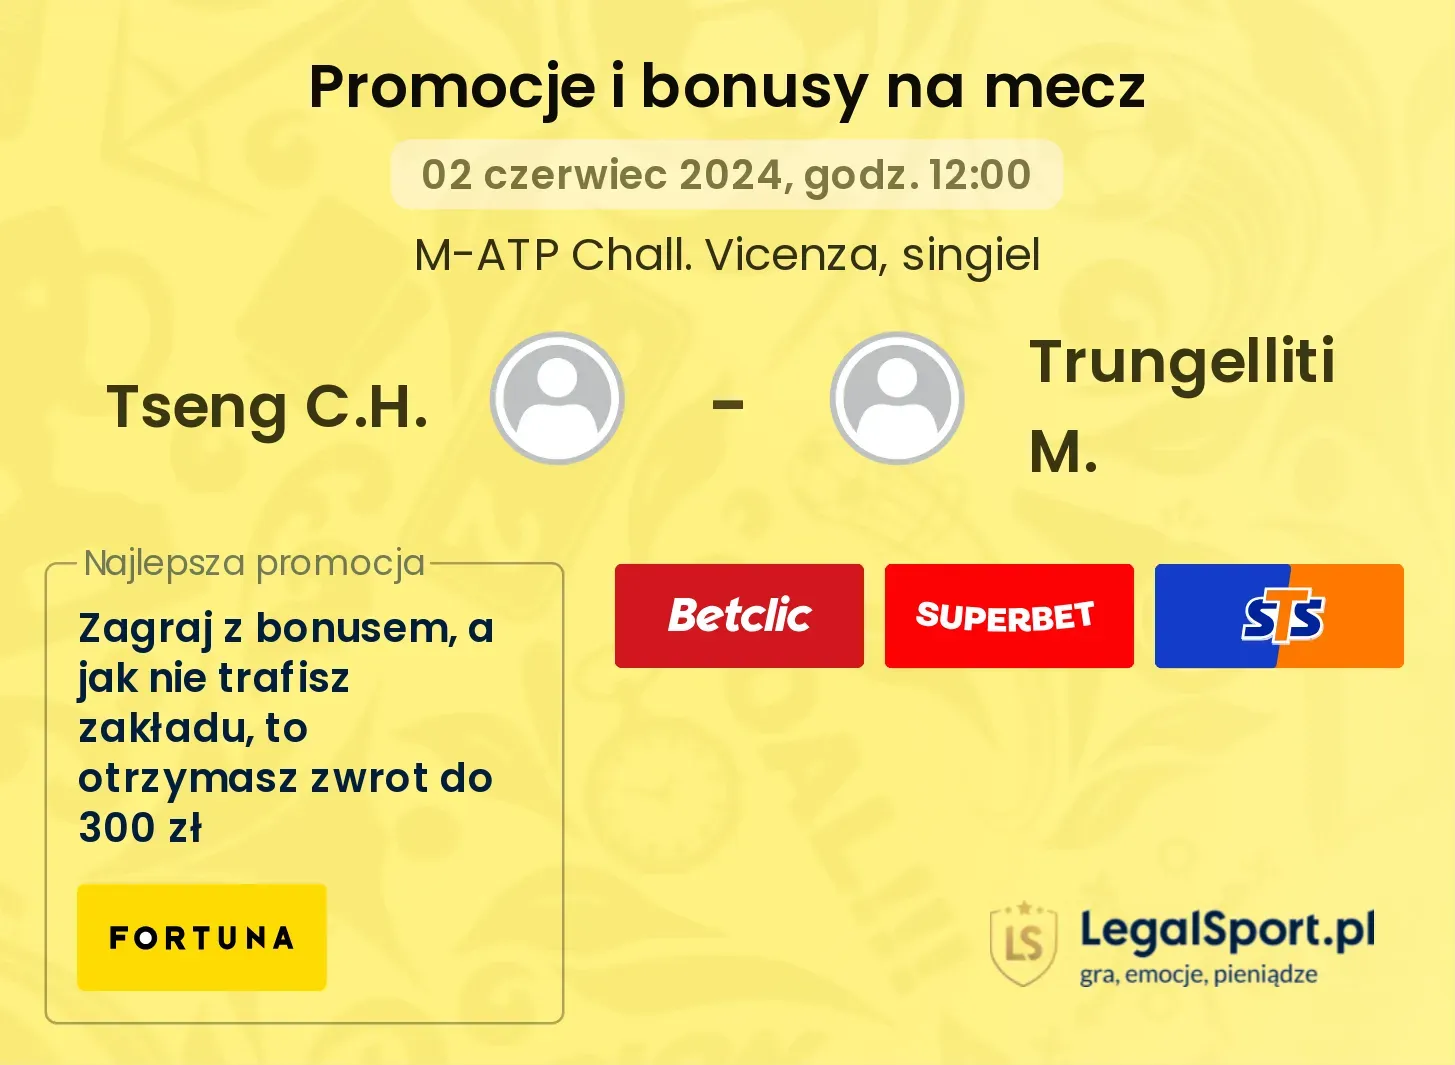 Tseng C.H. - Trungelliti M. bonusy i promocje (02.06, 12:00)